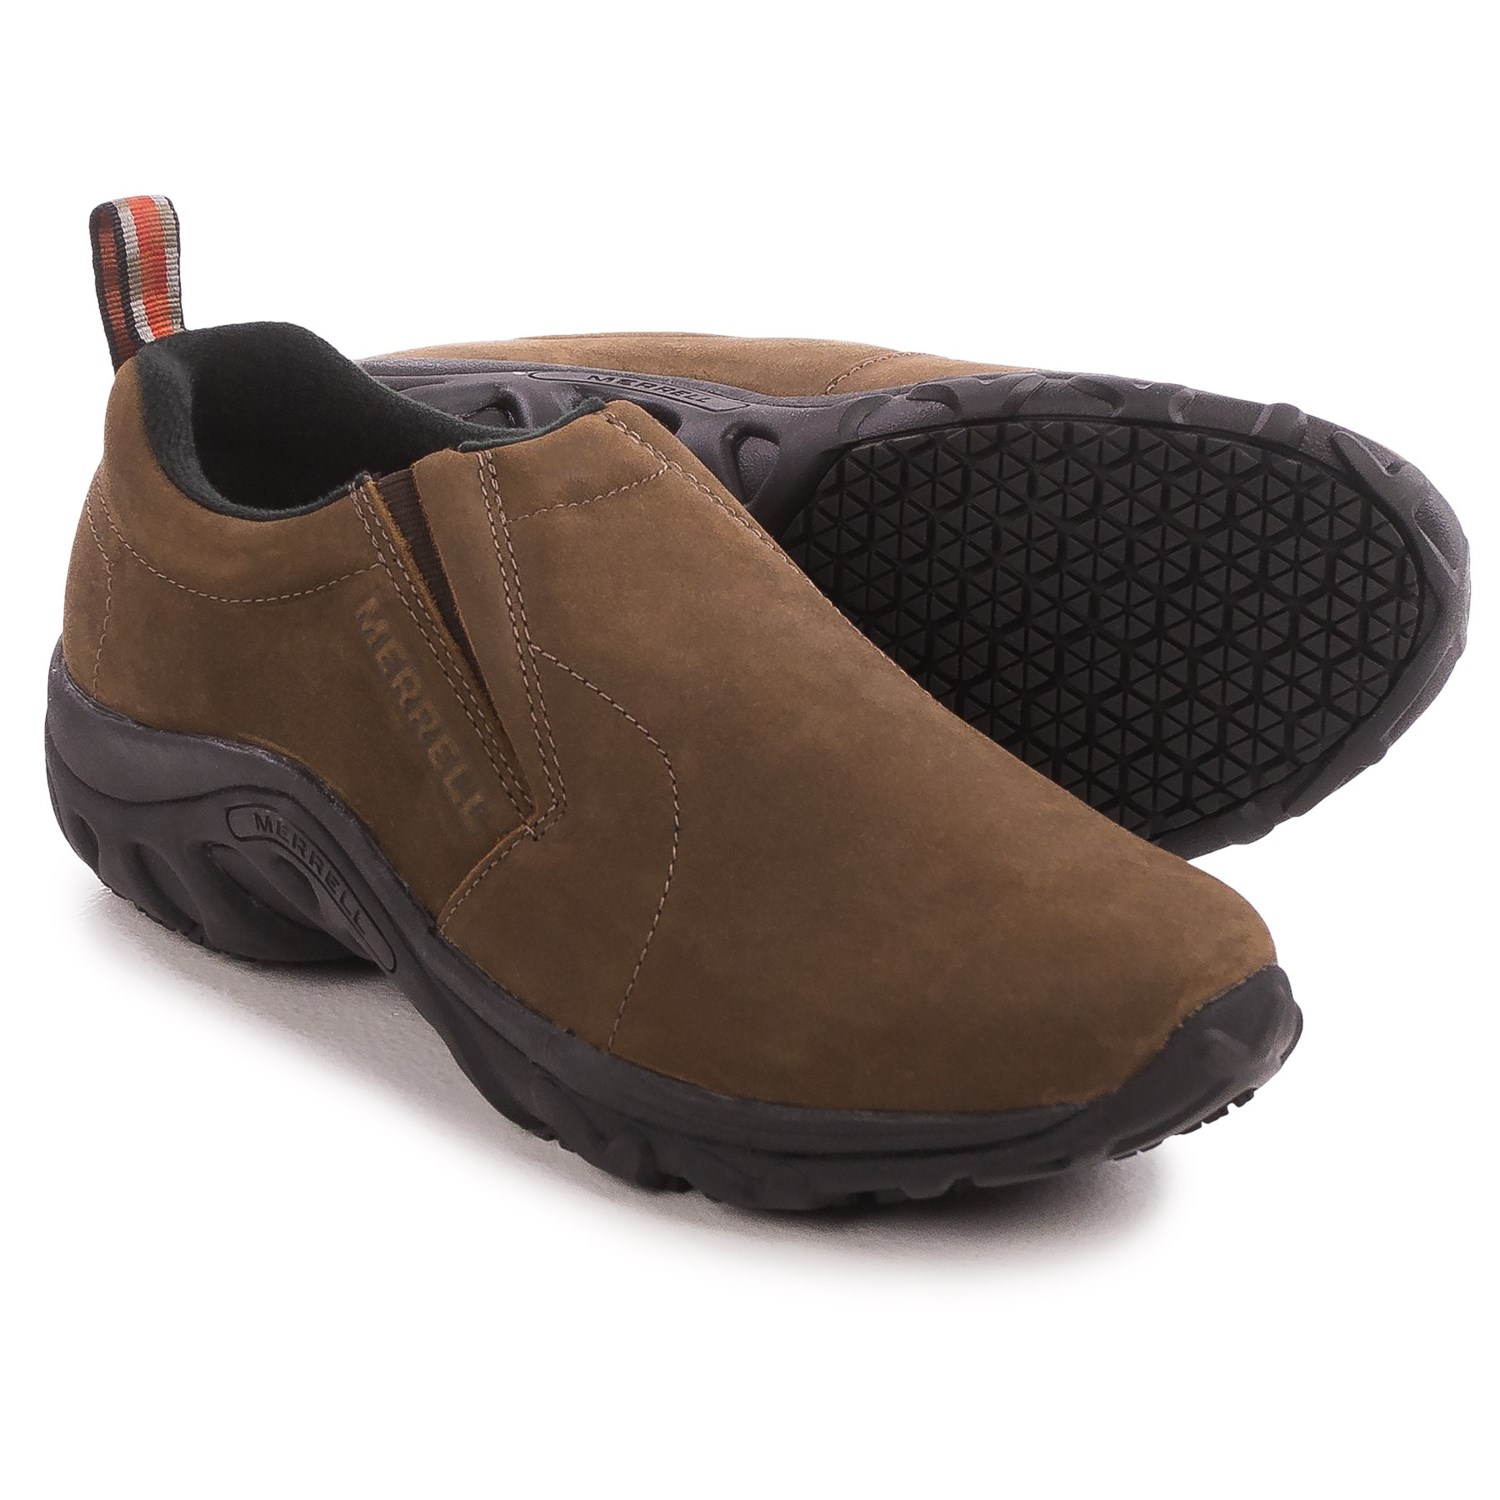 Merrell Jungle Moc Pro Grip Work Shoes (For Men) - Save 69%